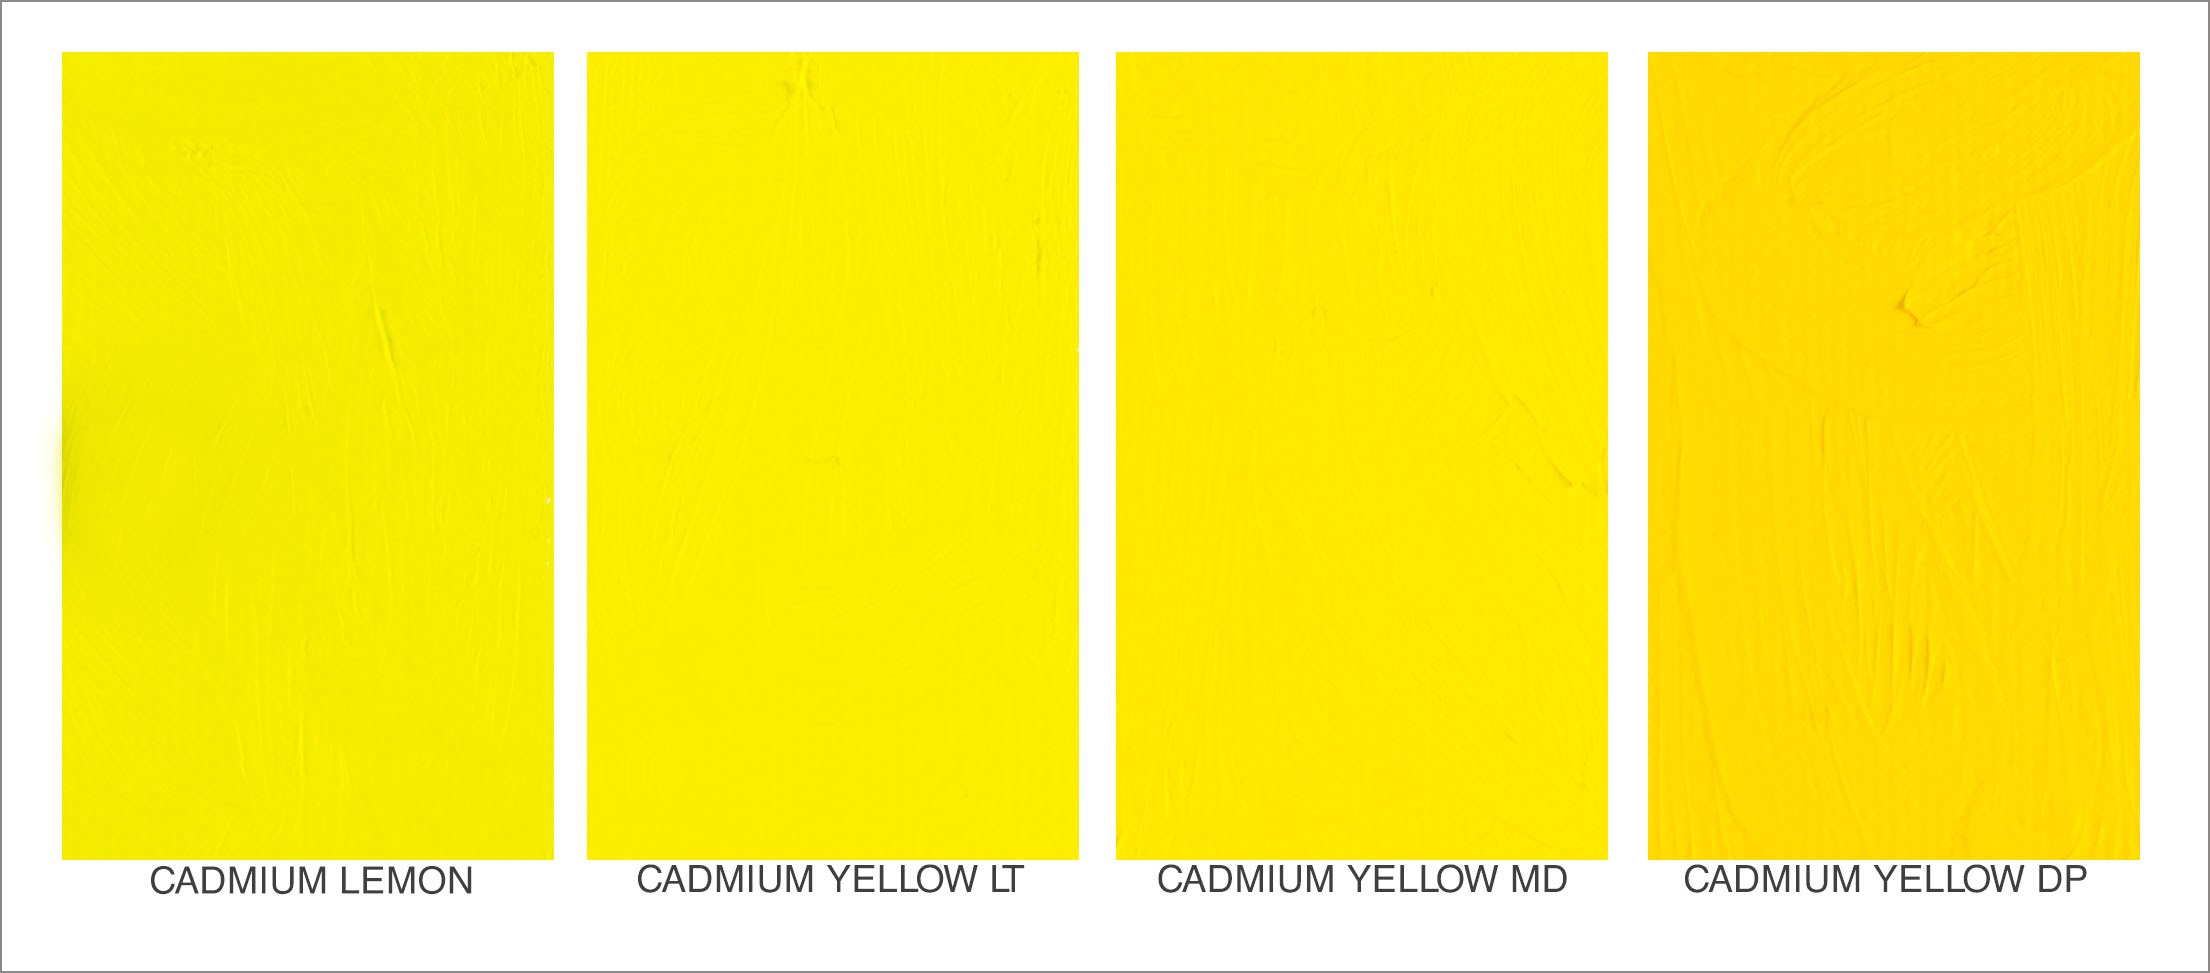 cadmium yellow